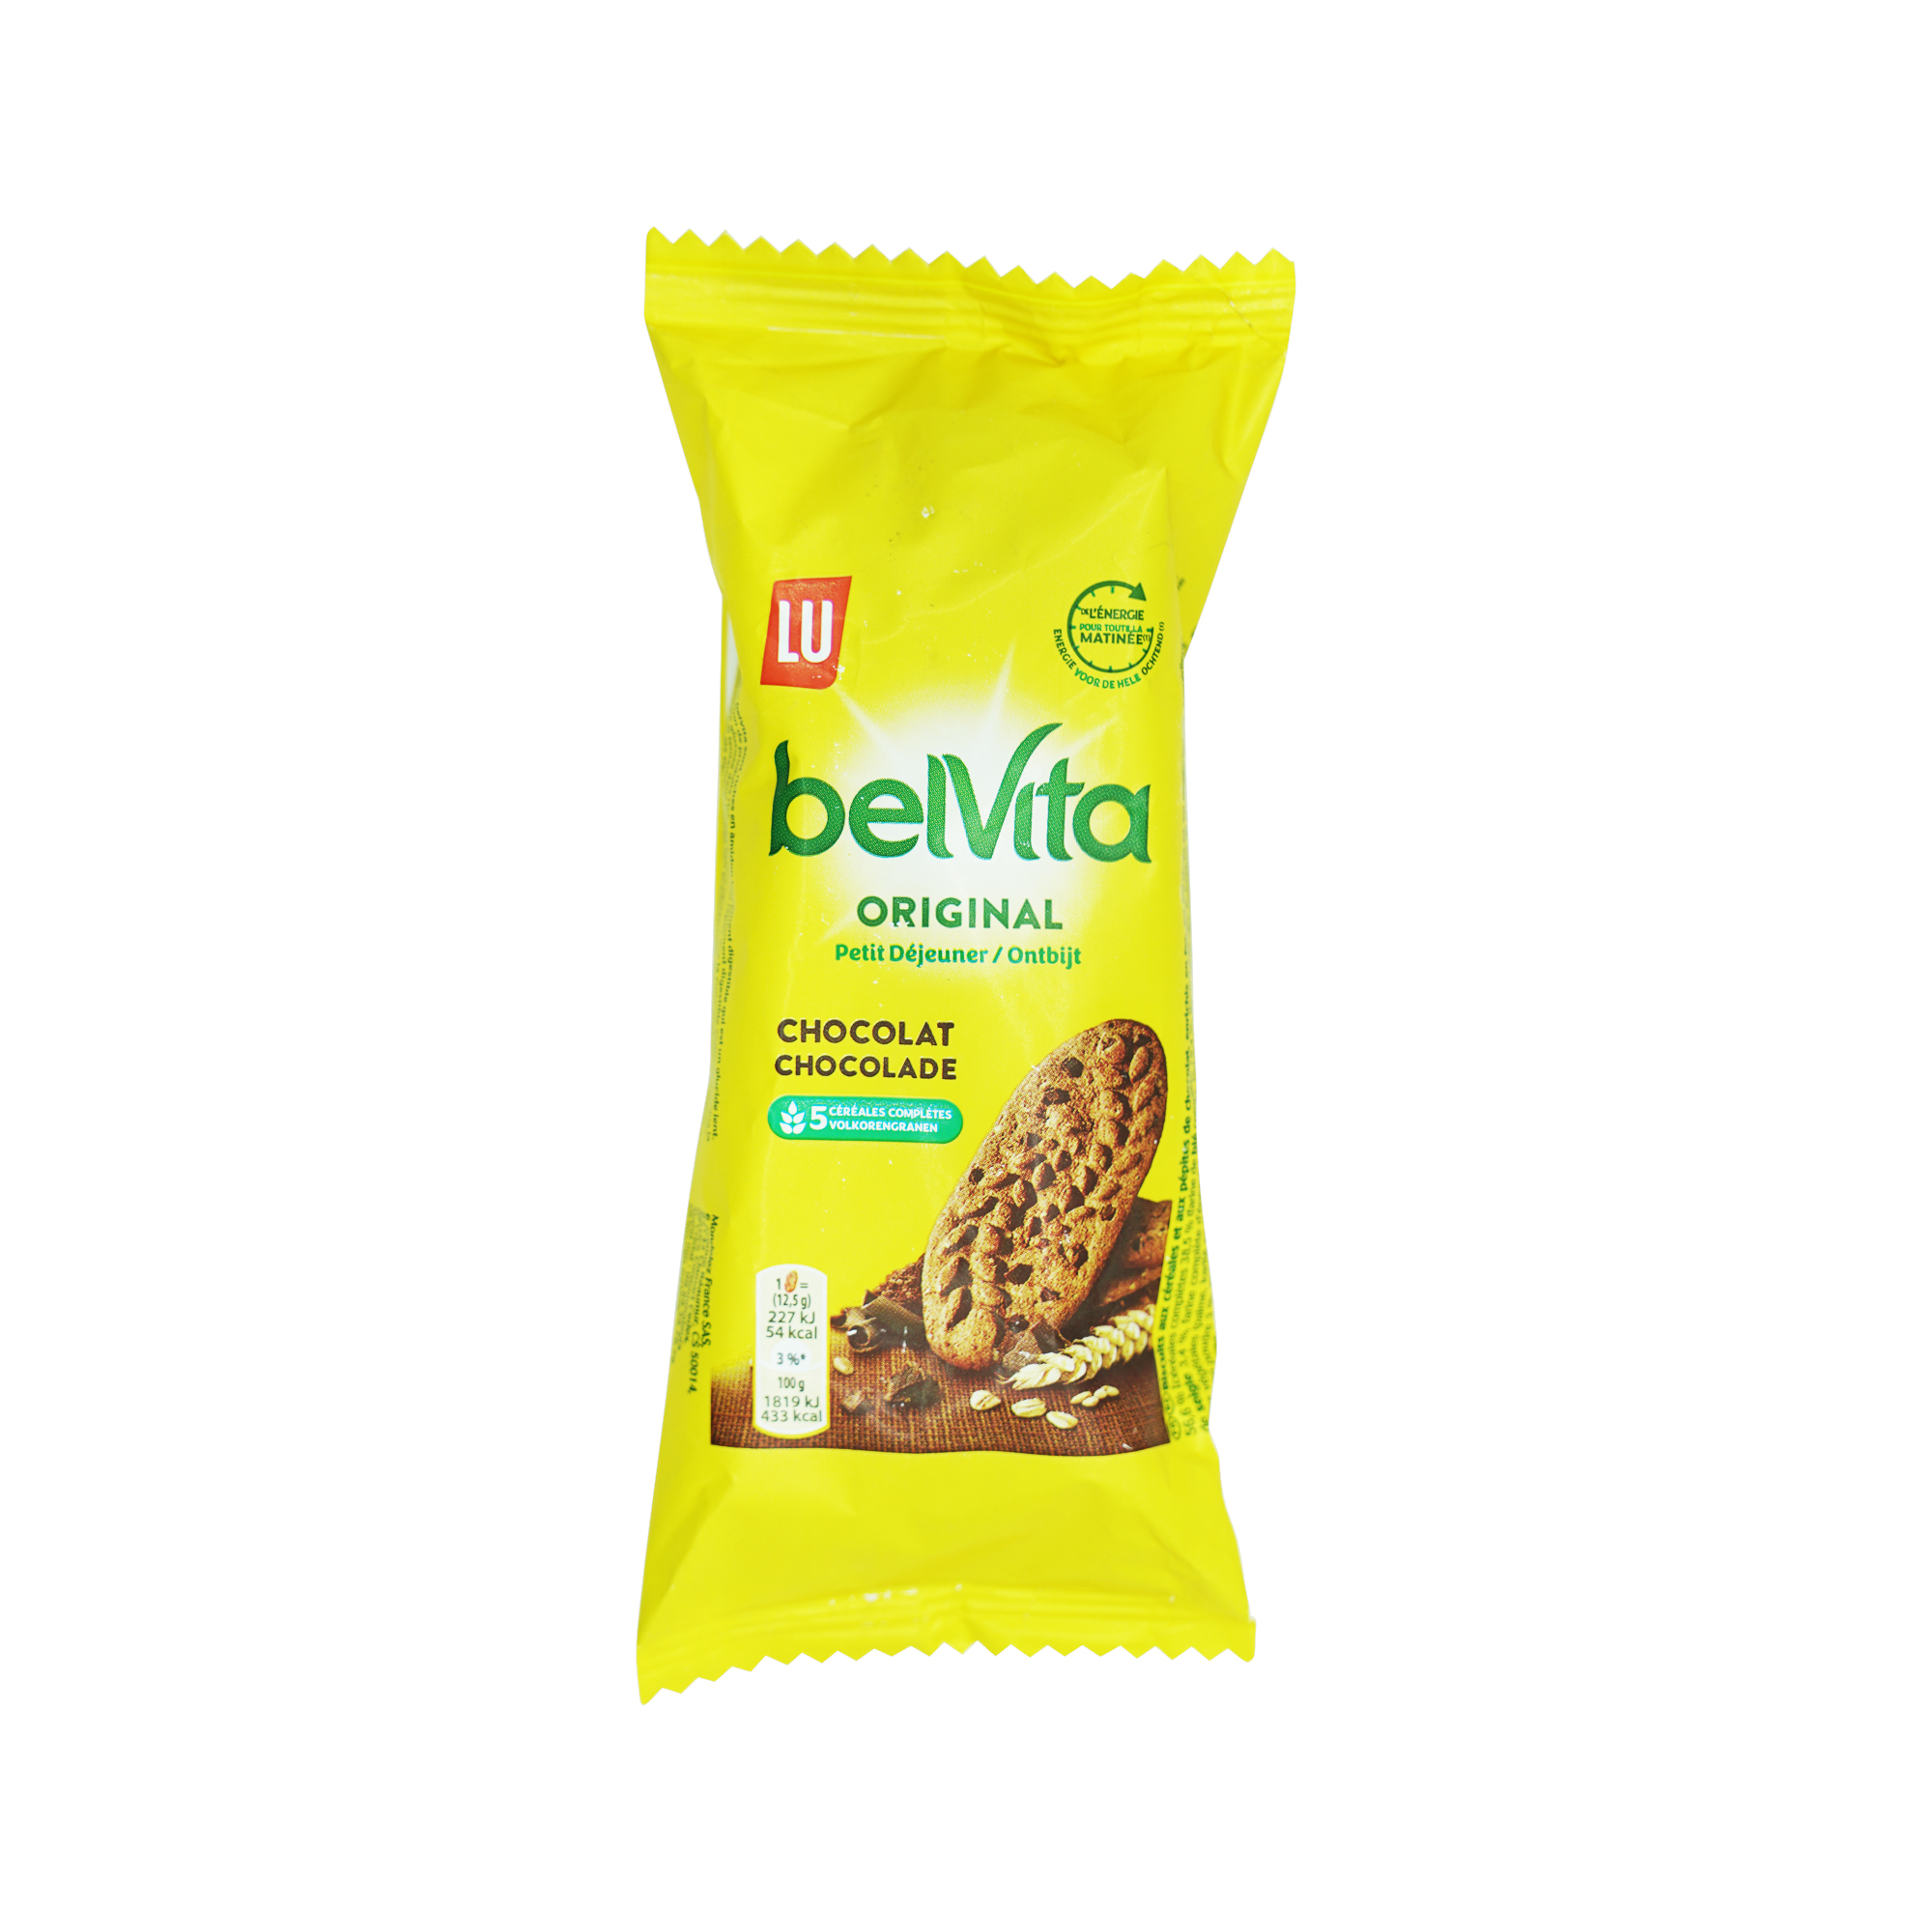 Belvita Chocolate Breakfast Biscuit (50g)